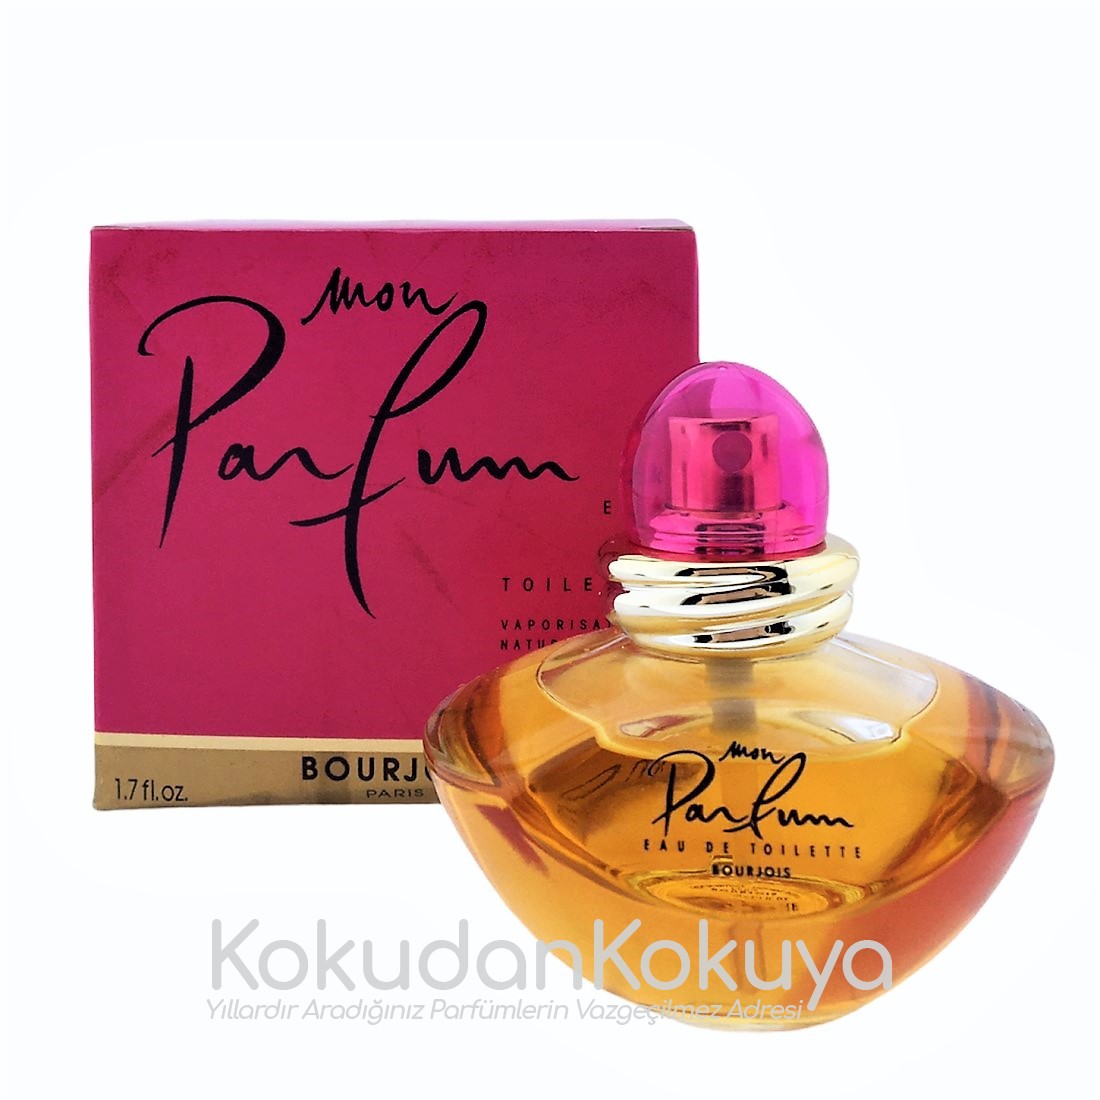 BOURJOIS Kadın Mon Parfum (Vintage)